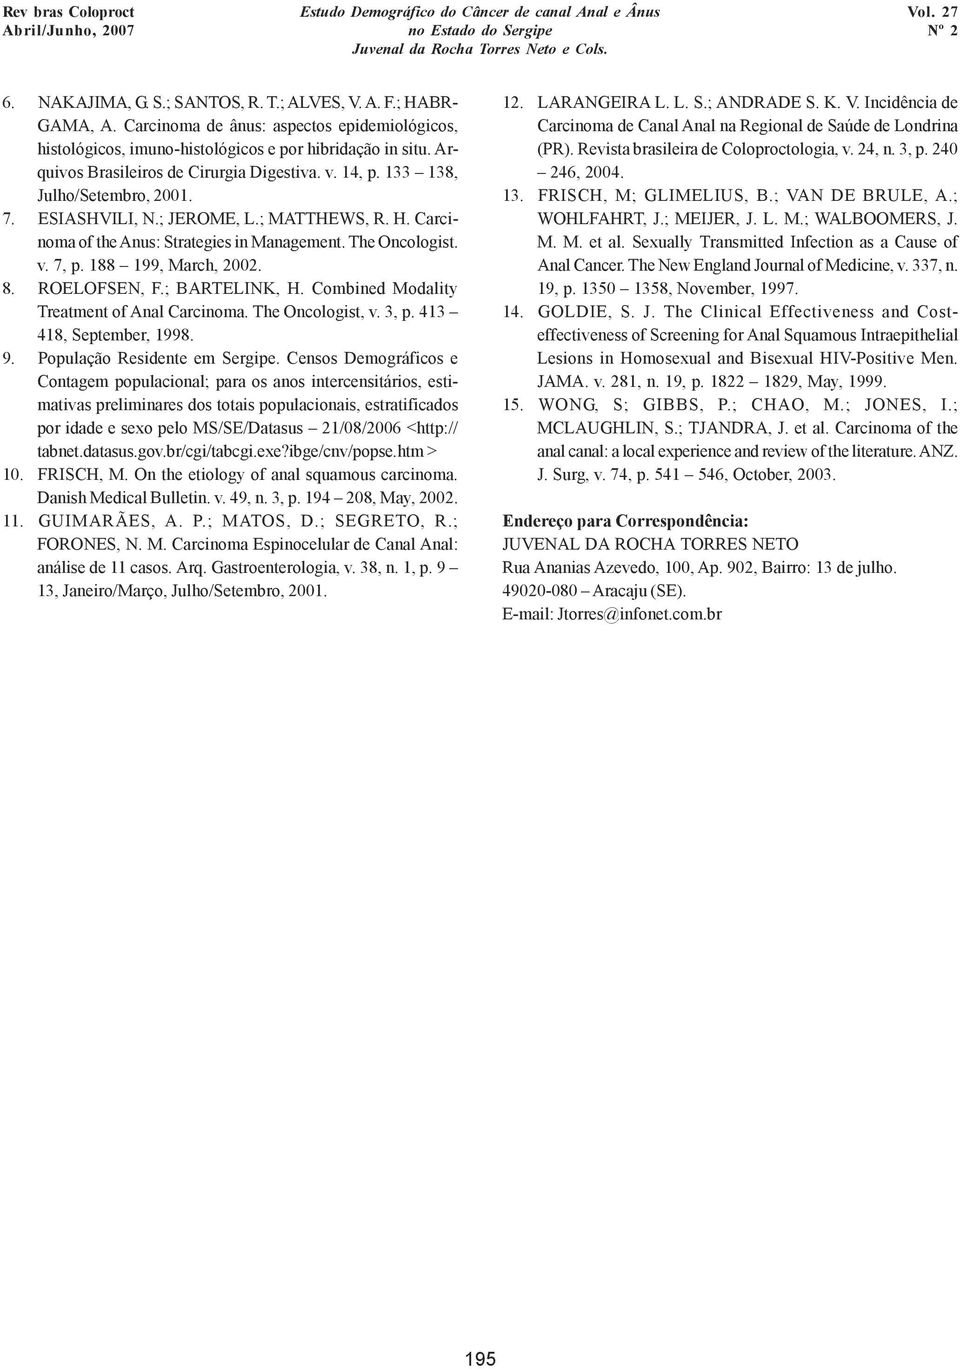 188 199, March, 2002. 8. ROELOFSEN, F.; BARTELINK, H. Combined Modality Treatment of Anal Carcinoma. The Oncologist, v. 3, p. 413 418, September, 1998. 9. População Residente em Sergipe.